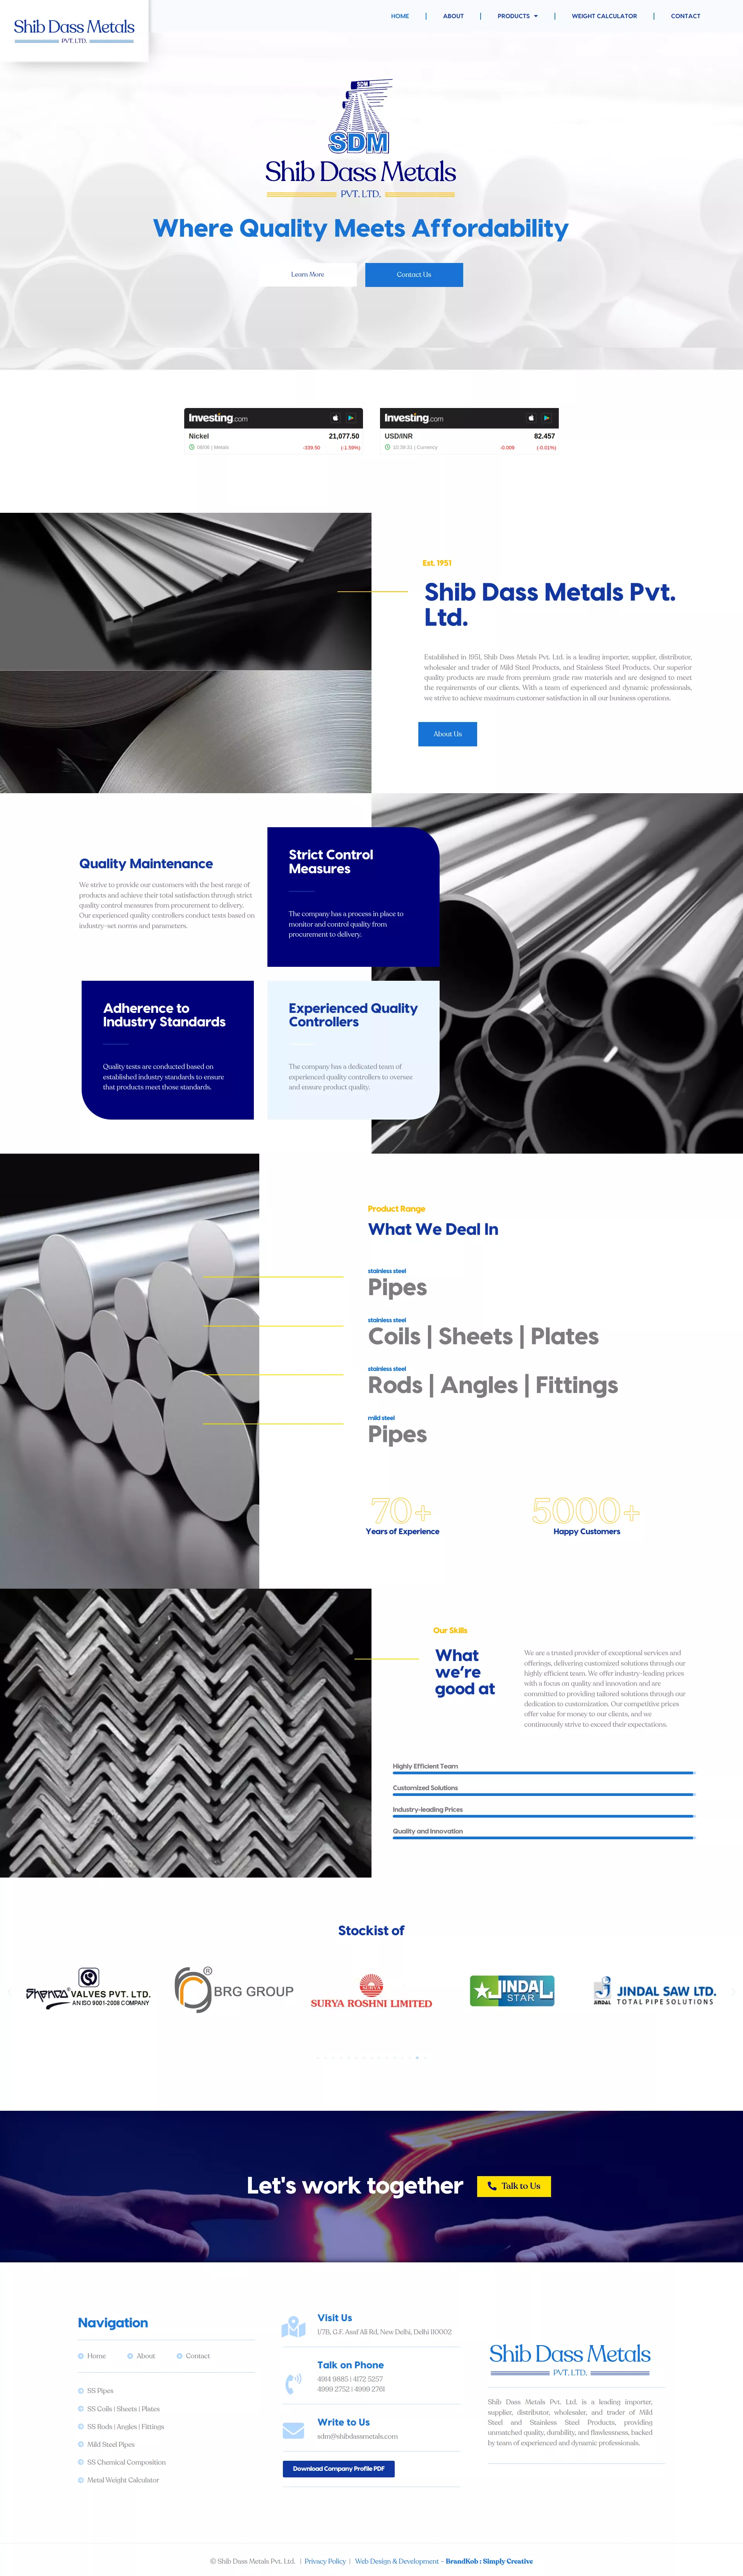 Homepage Shib Dass Metals- BrandKob Projects